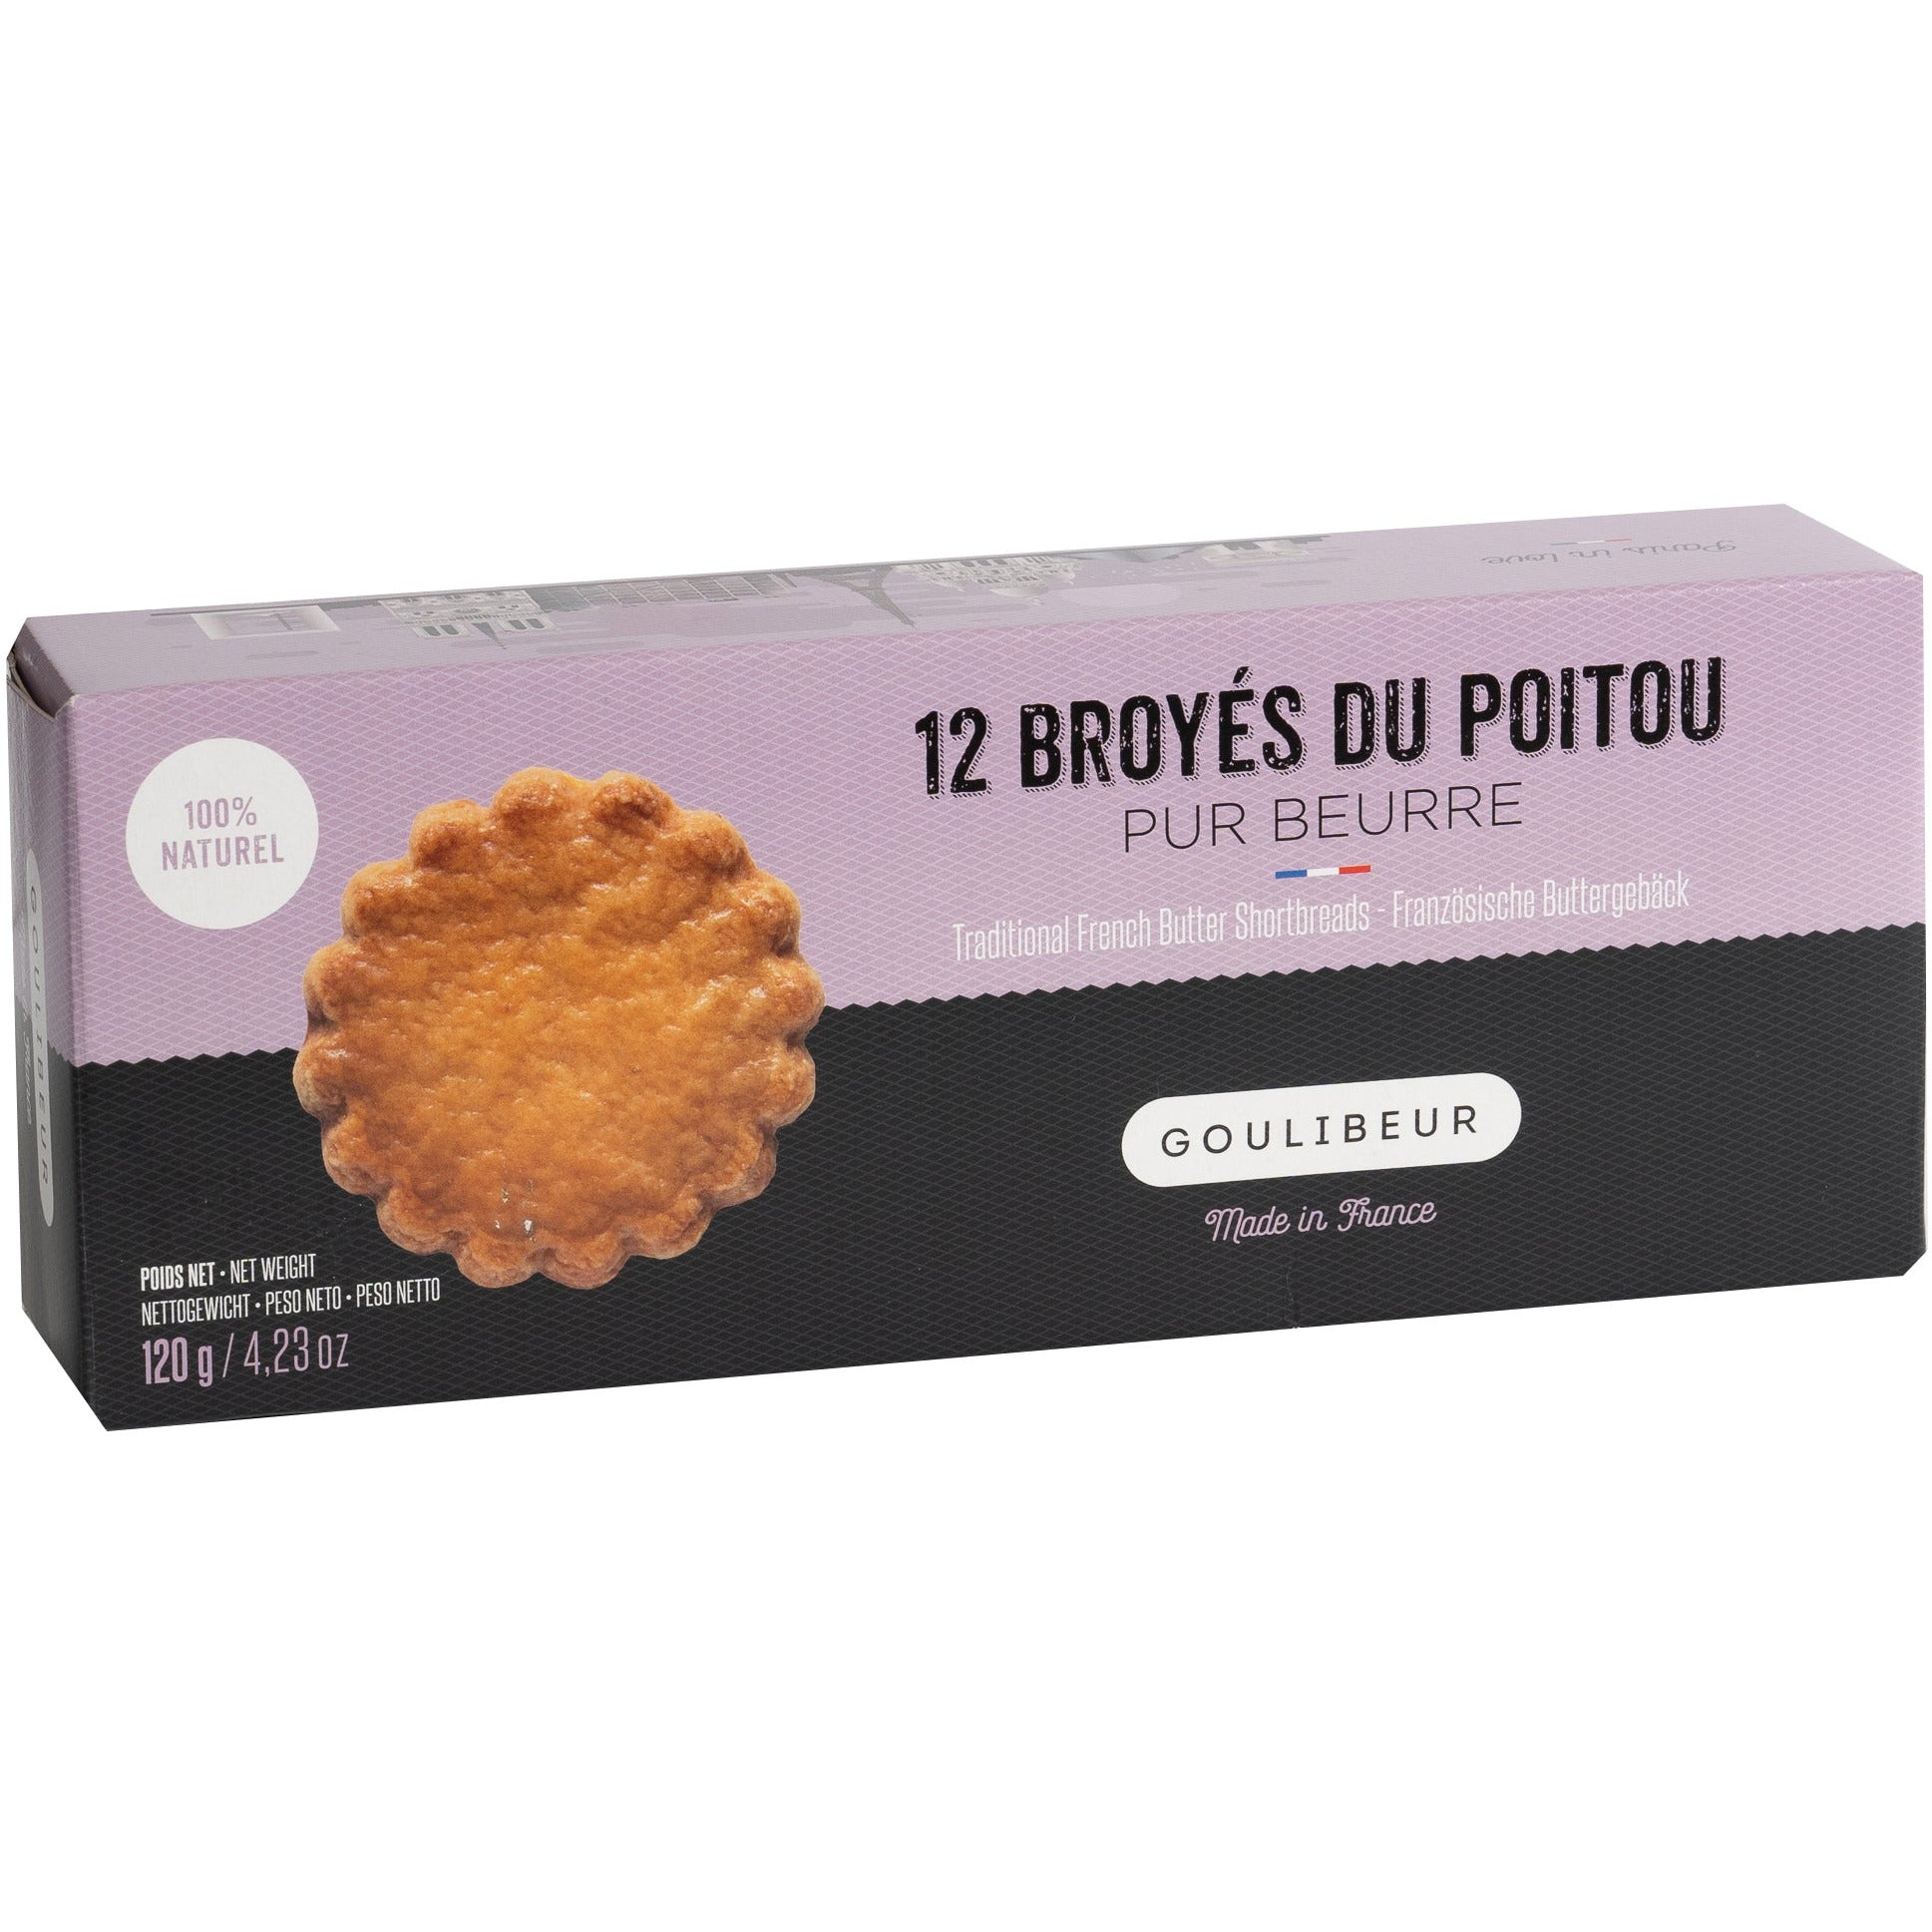 French Butter Biscuits (Broyés du Poitou)